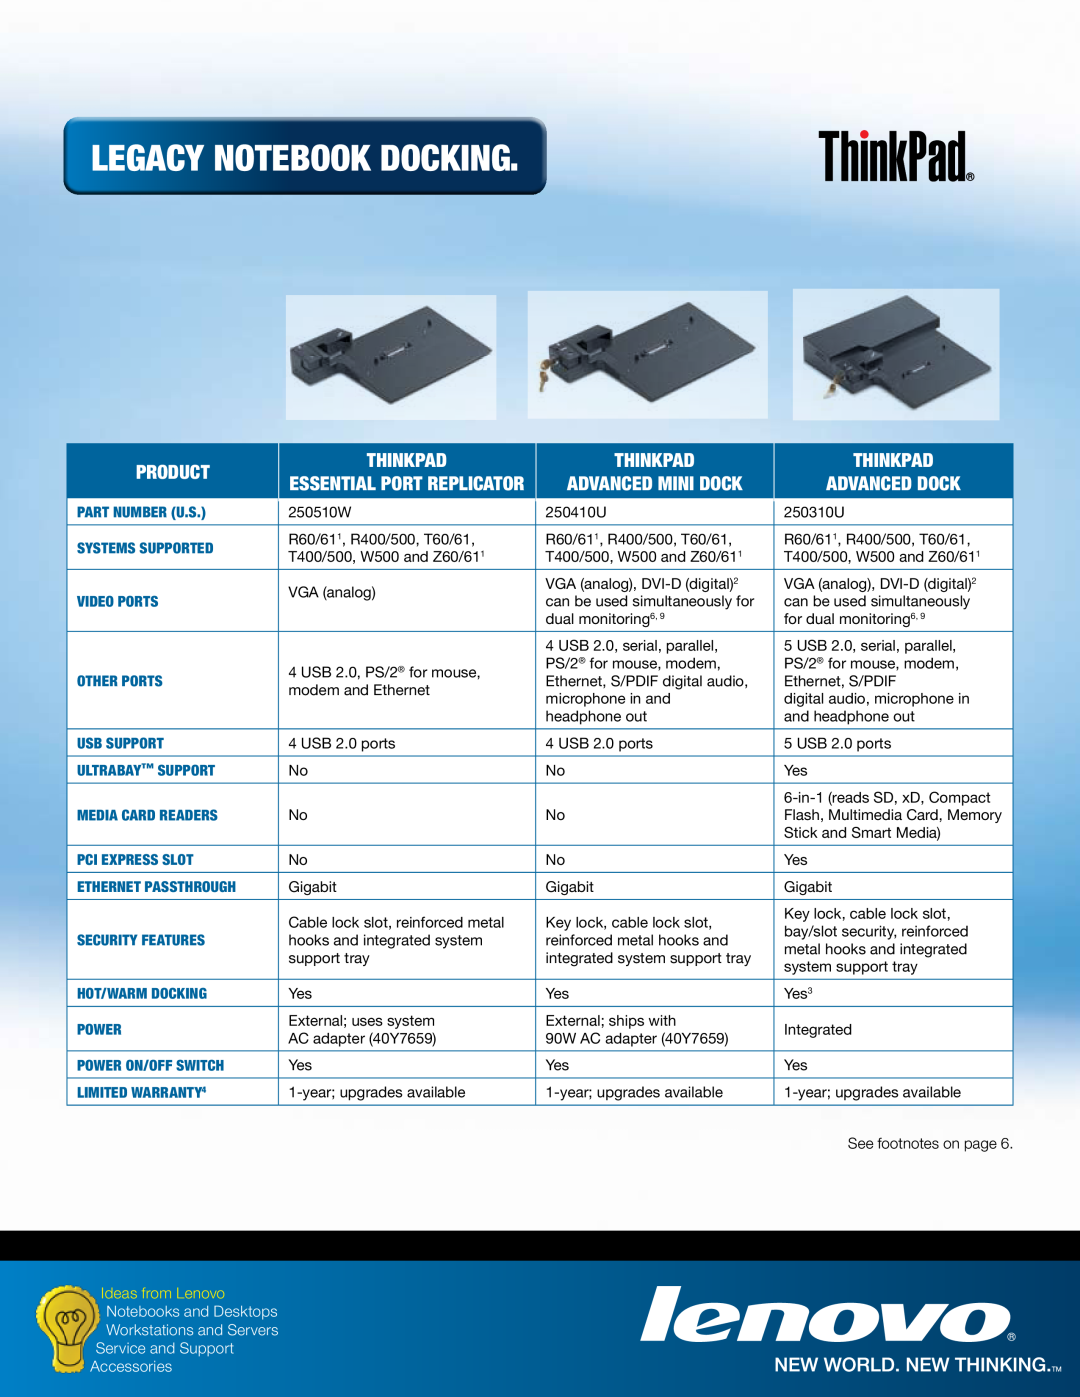 Lenovo 250310U Legacy Notebook Docking, Product, ThinkPad, Essential Port Replicator, Advanced Mini Dock, Advanced Dock 